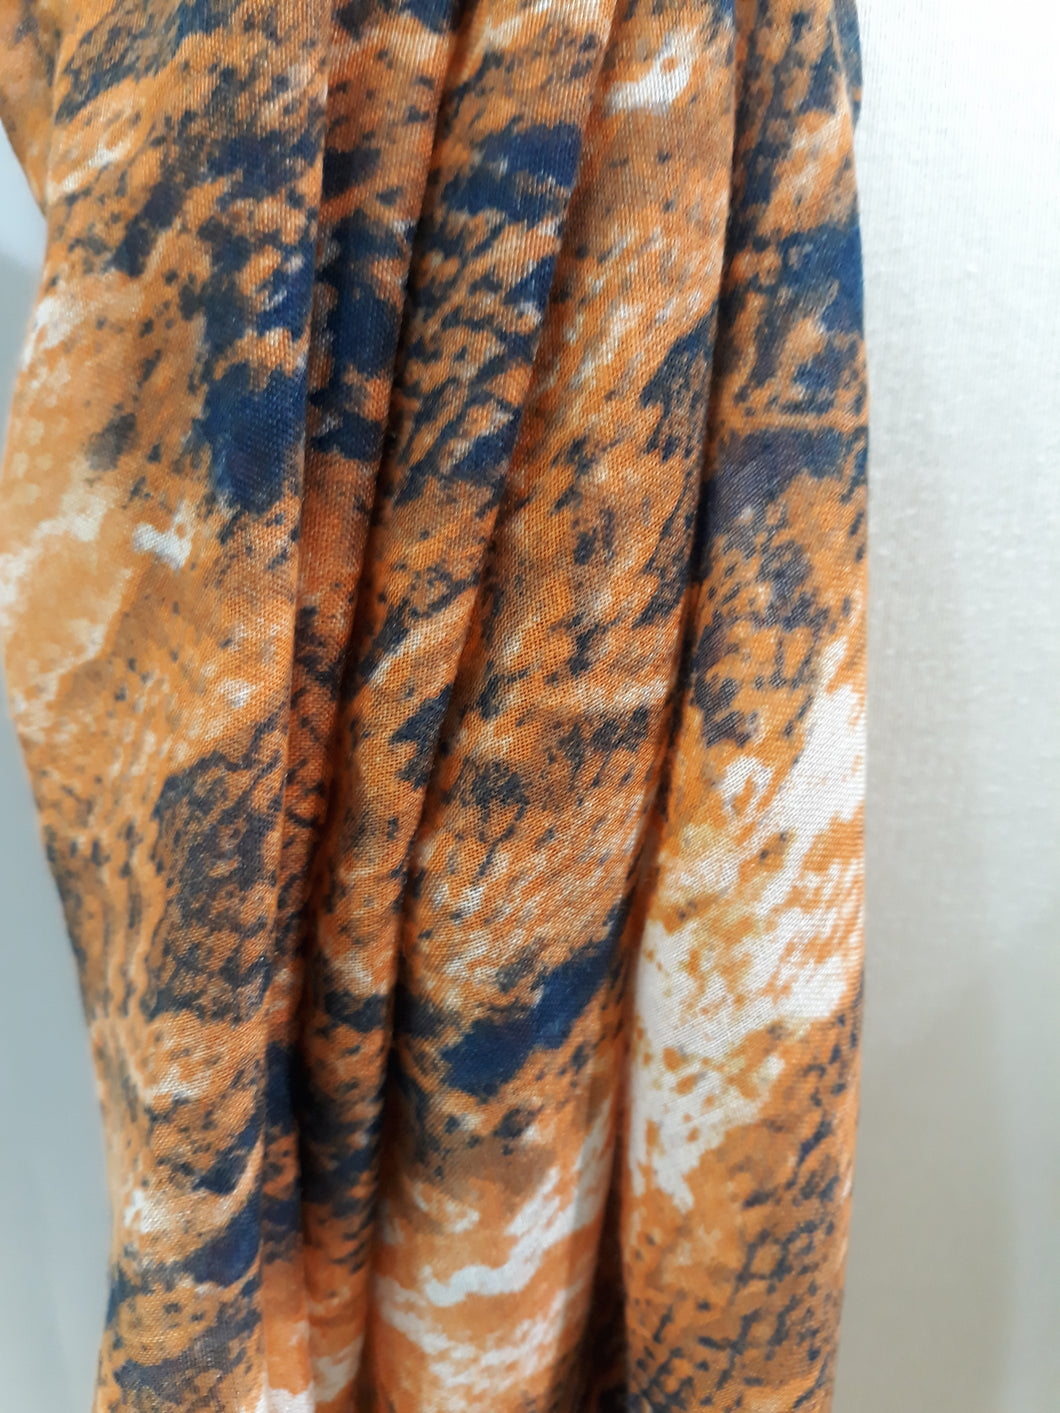 Orange snake print scarf